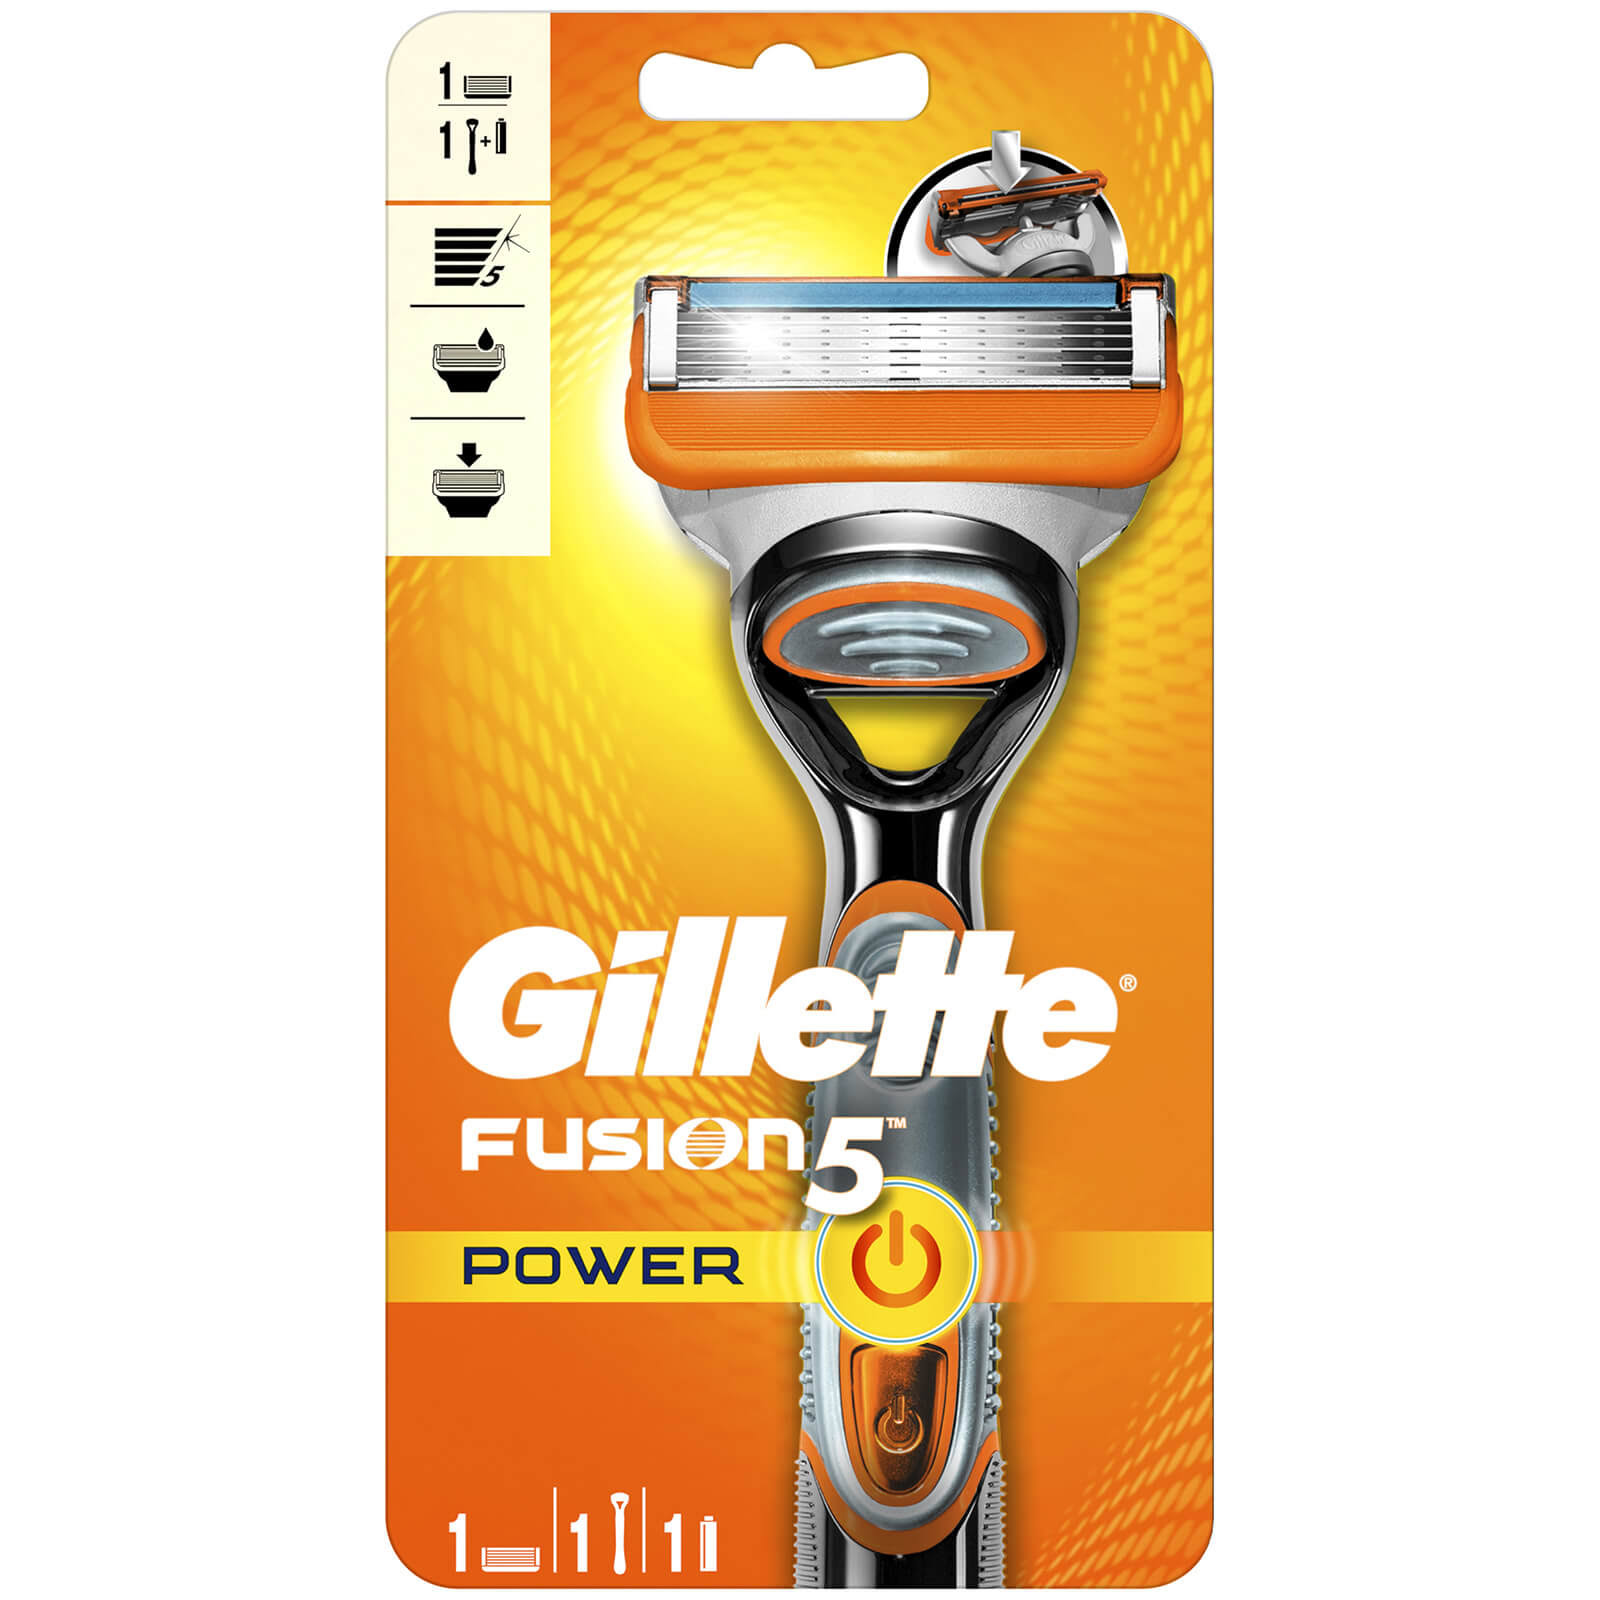 Gillette Men's Fusion Power Razor